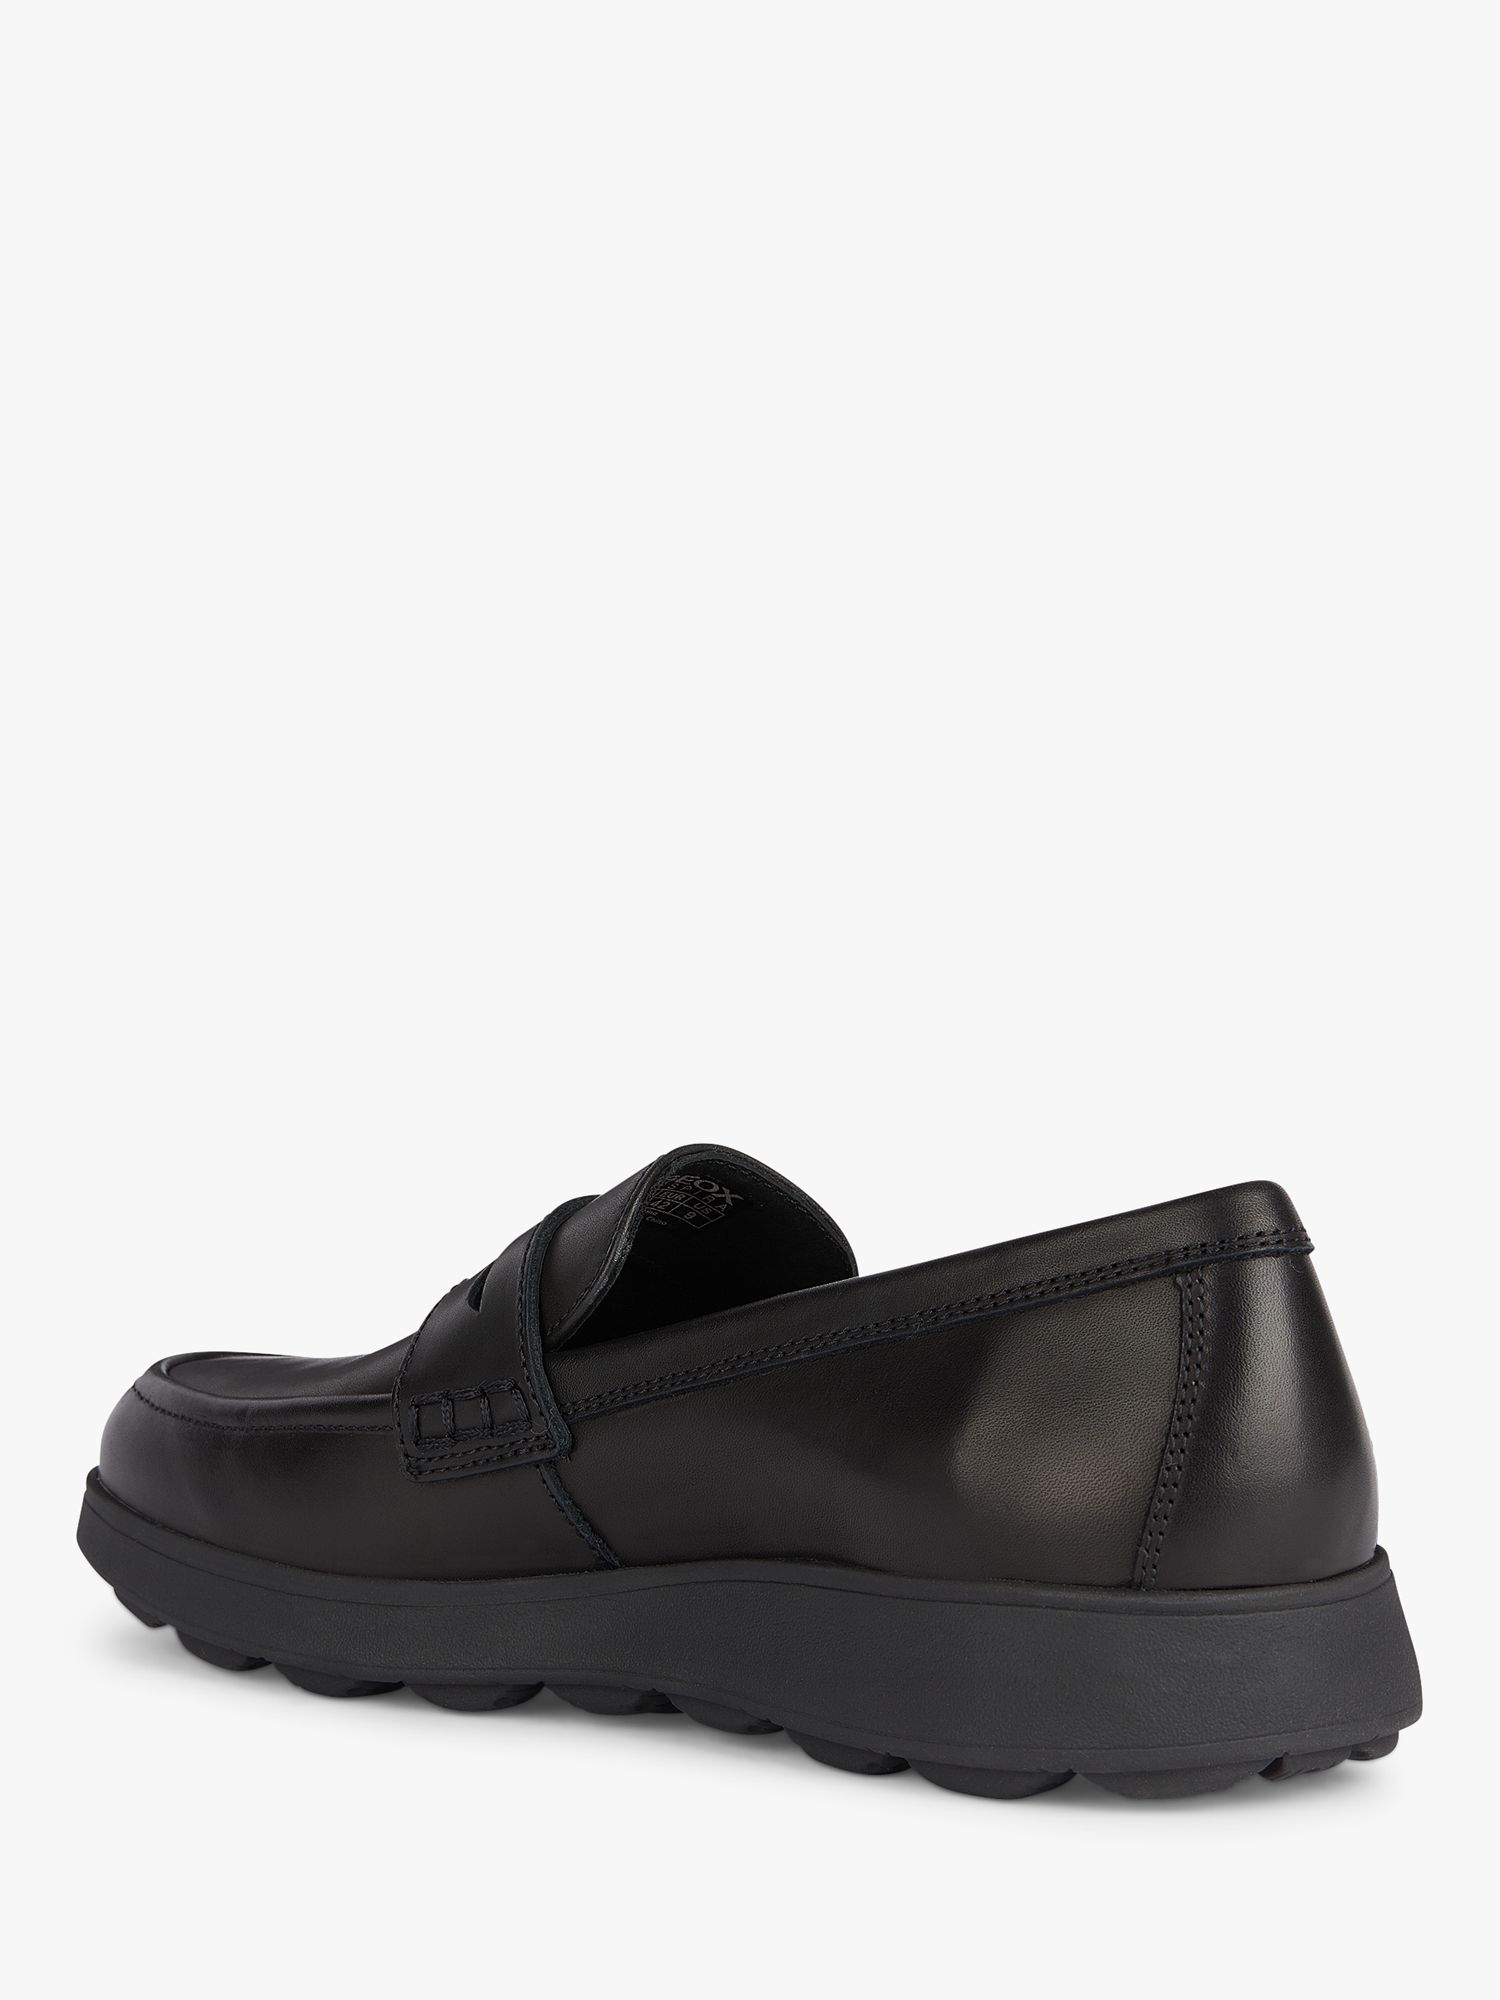 Geox Spherica EC10 Leather Loafers, Black, EU39